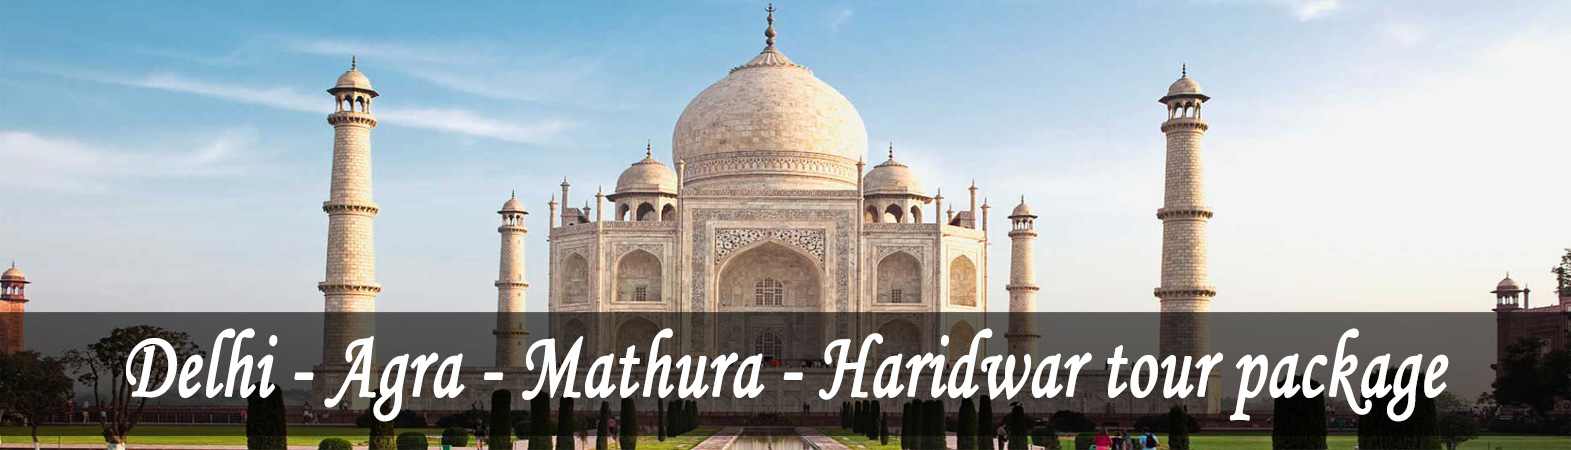 delhi agra mathura haridwar tour package